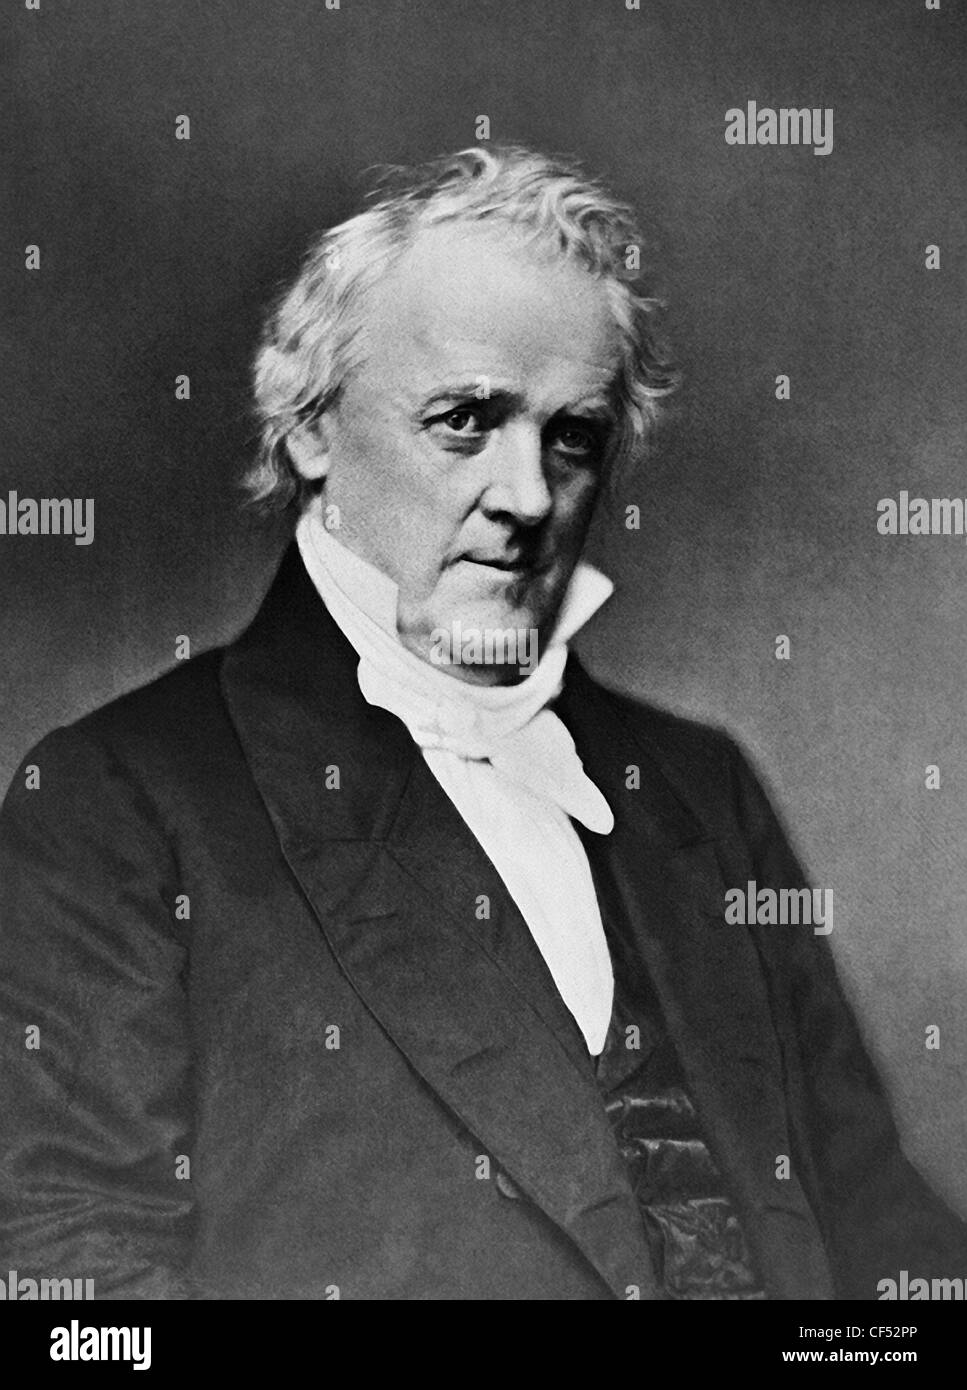 Vintage-Portraitfoto von James Buchanan (1791 – 1868) – dem 15. US-Präsidenten (1857 - 1861). Foto ca. 1860. Stockfoto